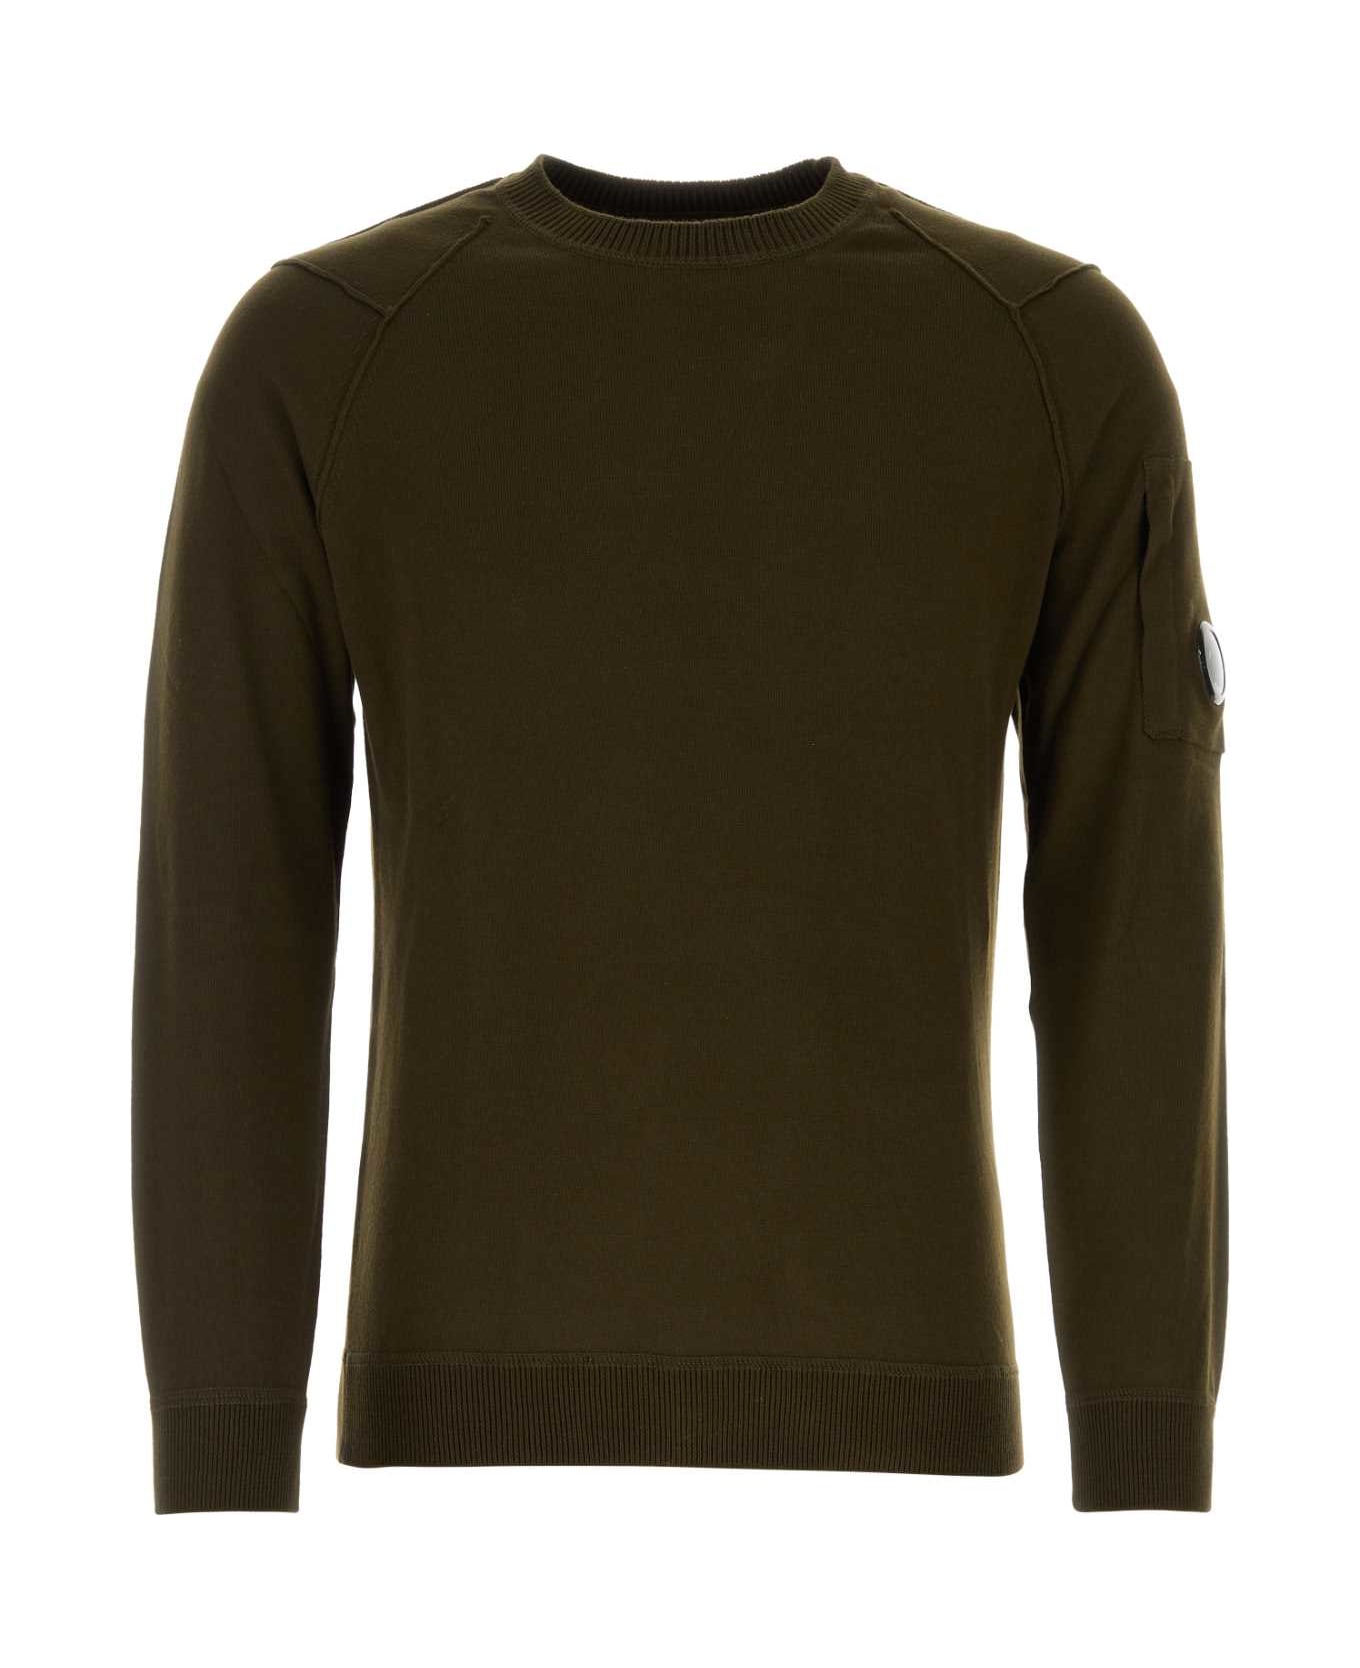 C.P. Company Dark Green Cotton Sweater - IVYGREEN ニットウェア